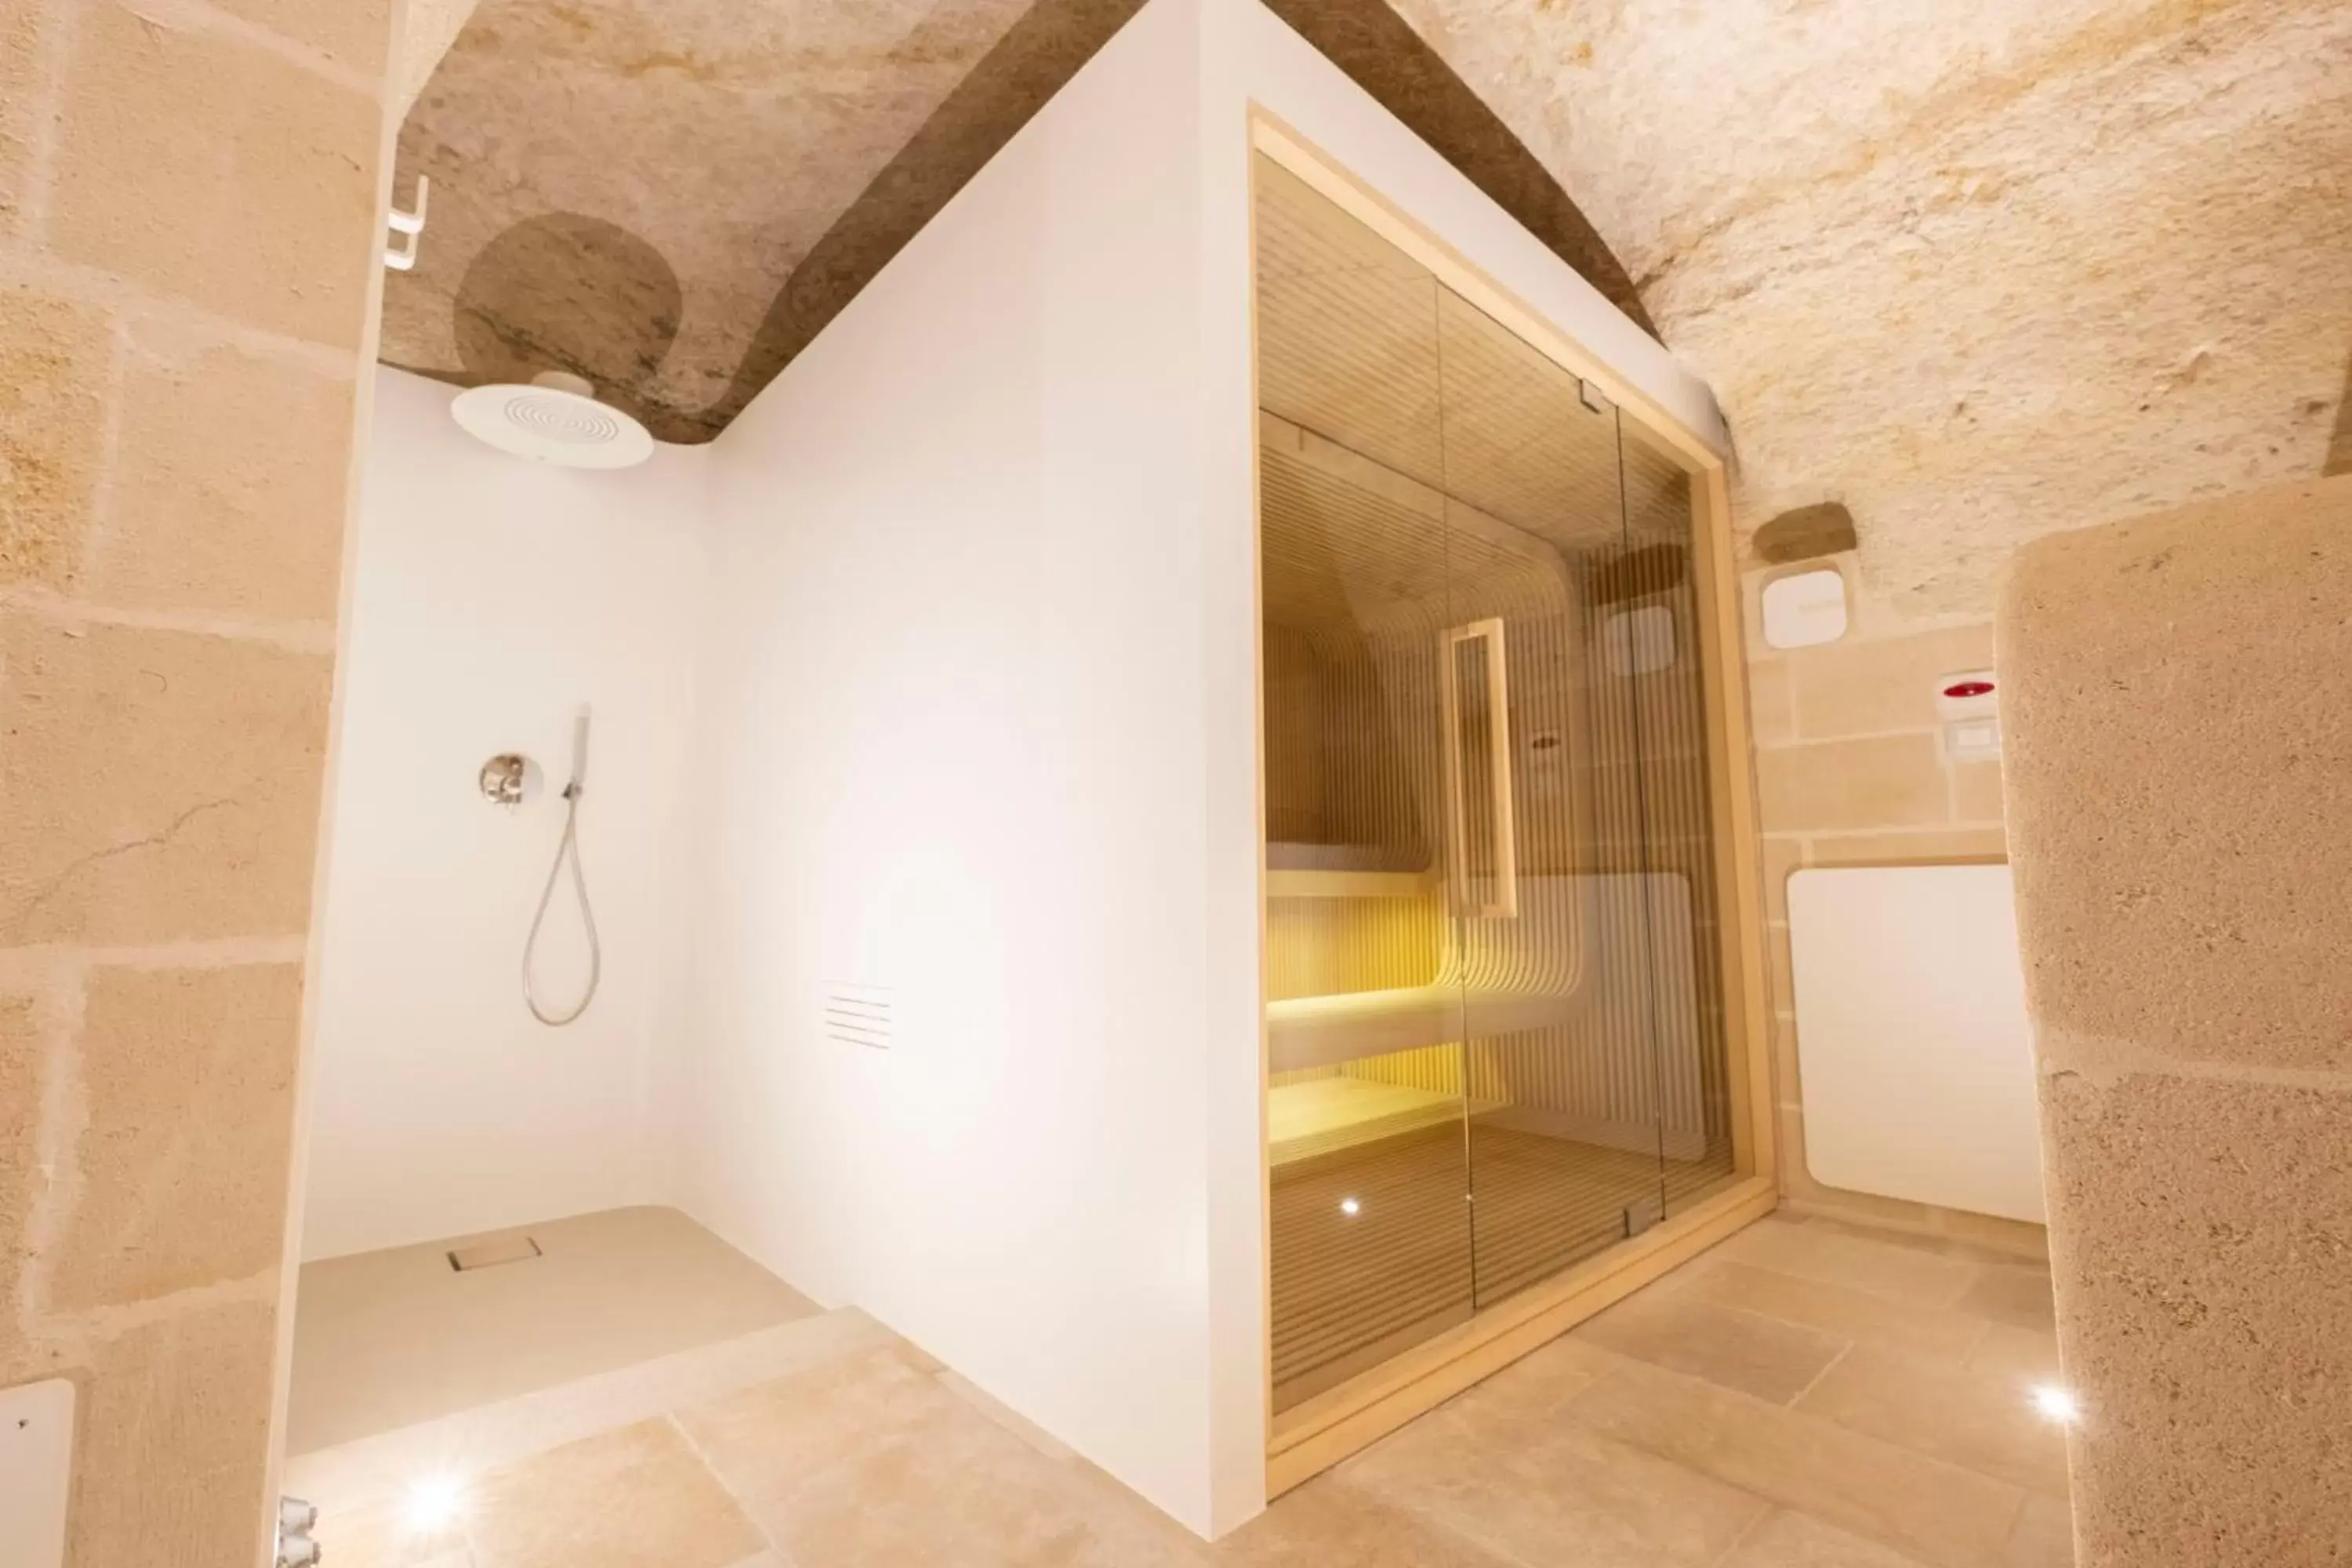 Bathroom in Aquatio Cave Luxury Hotel & SPA